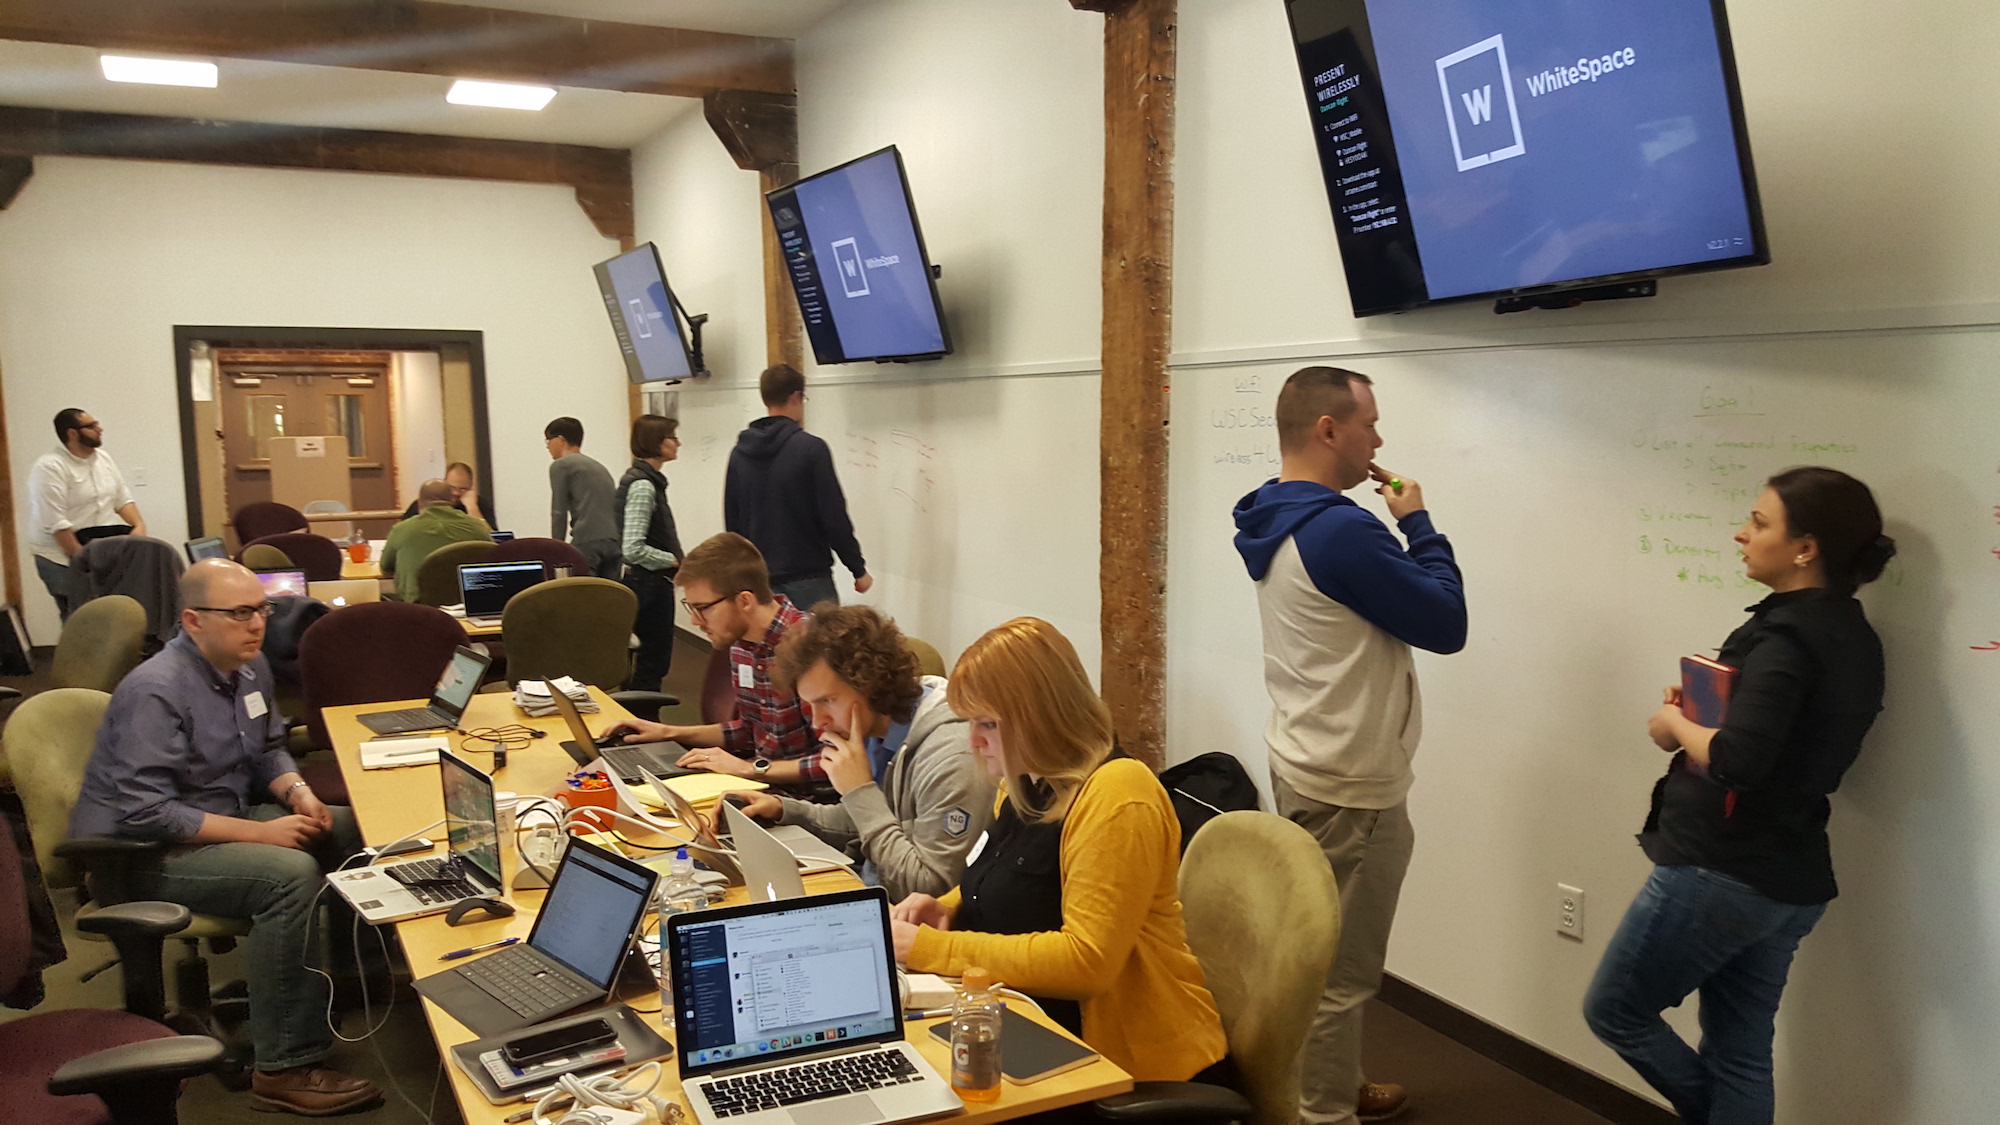 Teams working during the hackathon